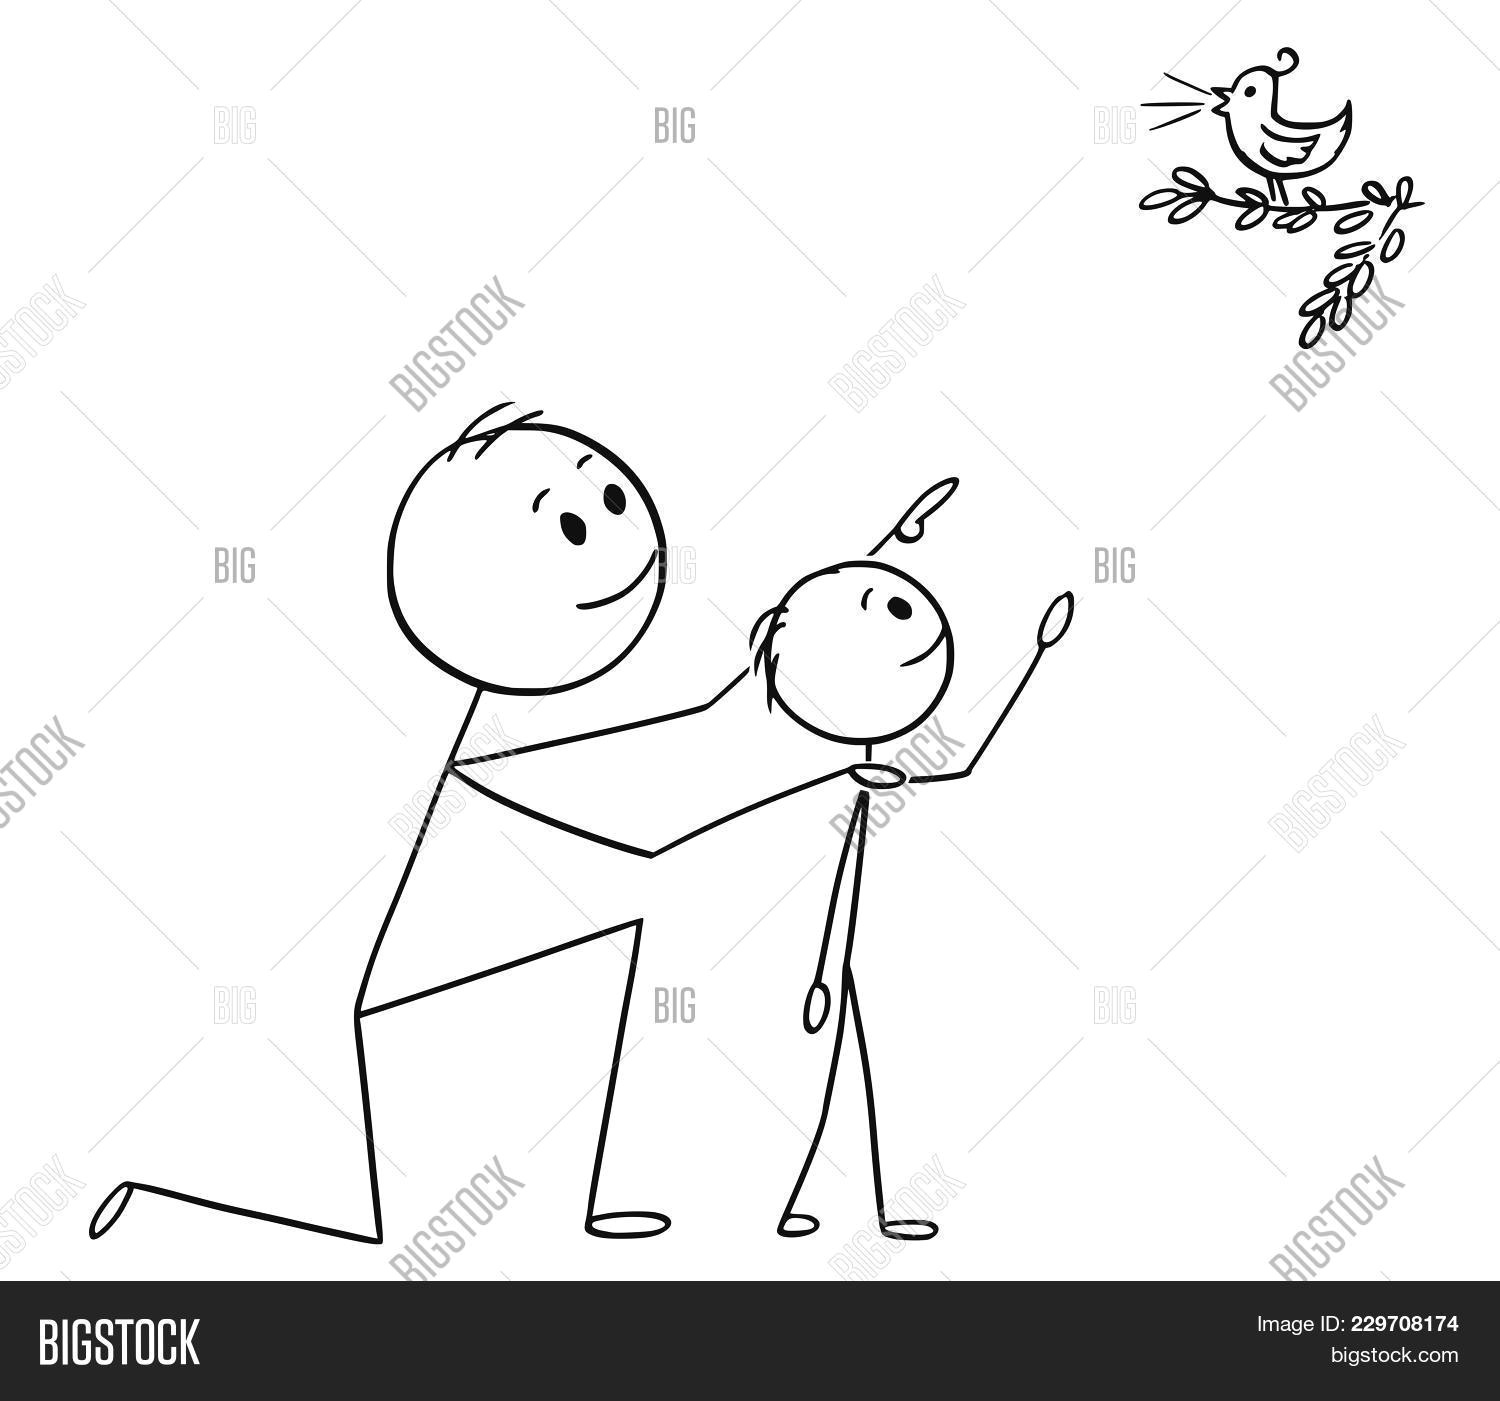 Drawing A Cartoon Dad Cartoon Stick Man Image Photo Free Trial Bigstock